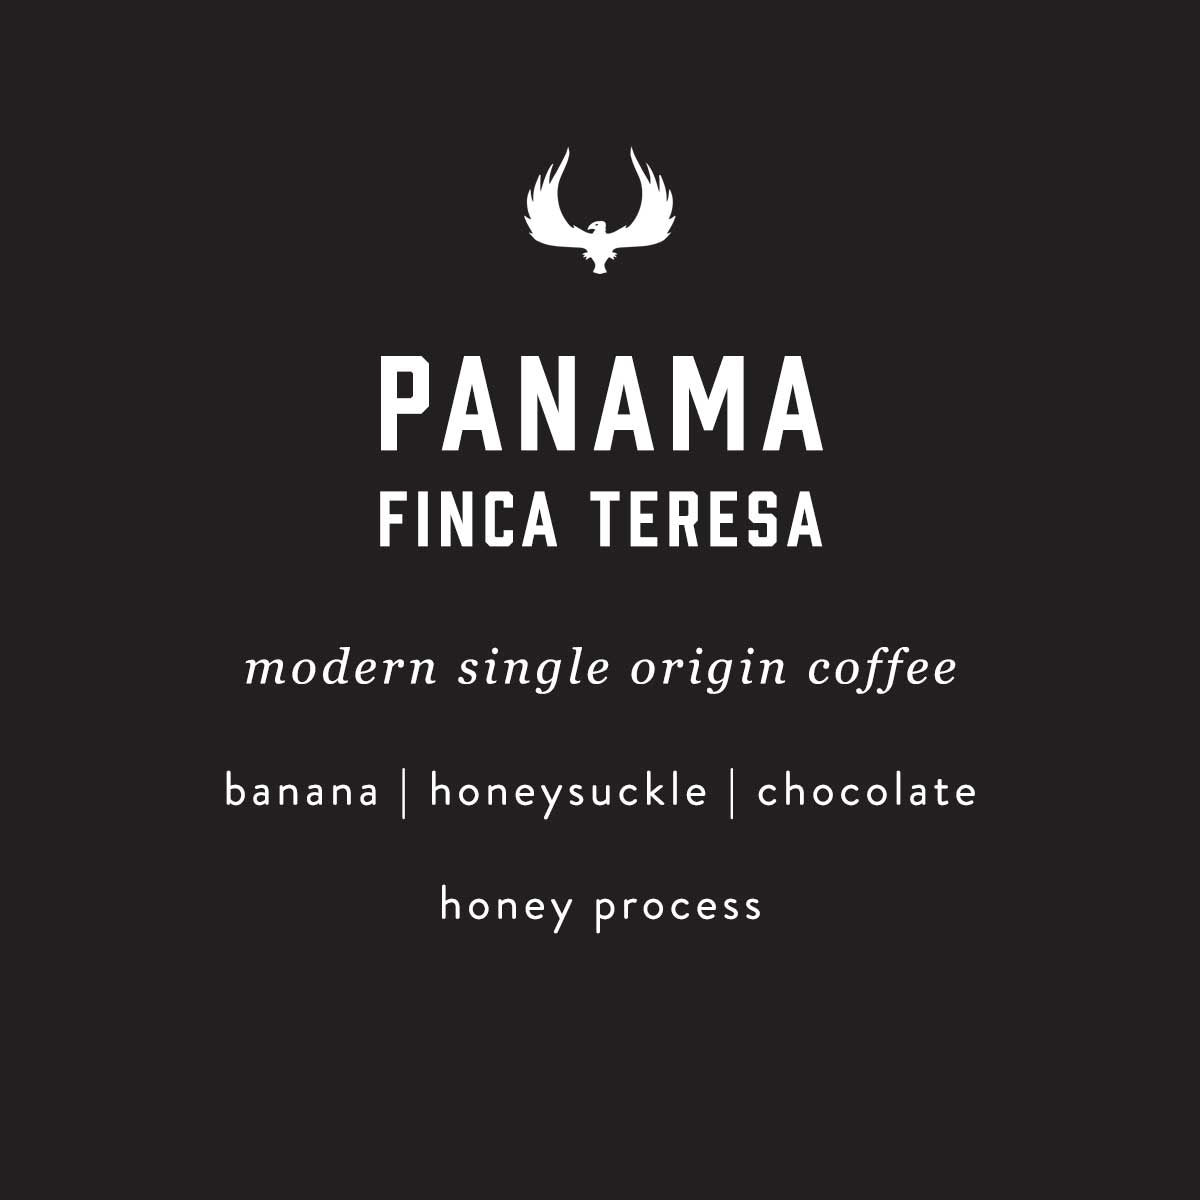 Panama Finca Teresa Specialty Coffee by Press Coffee Roasters